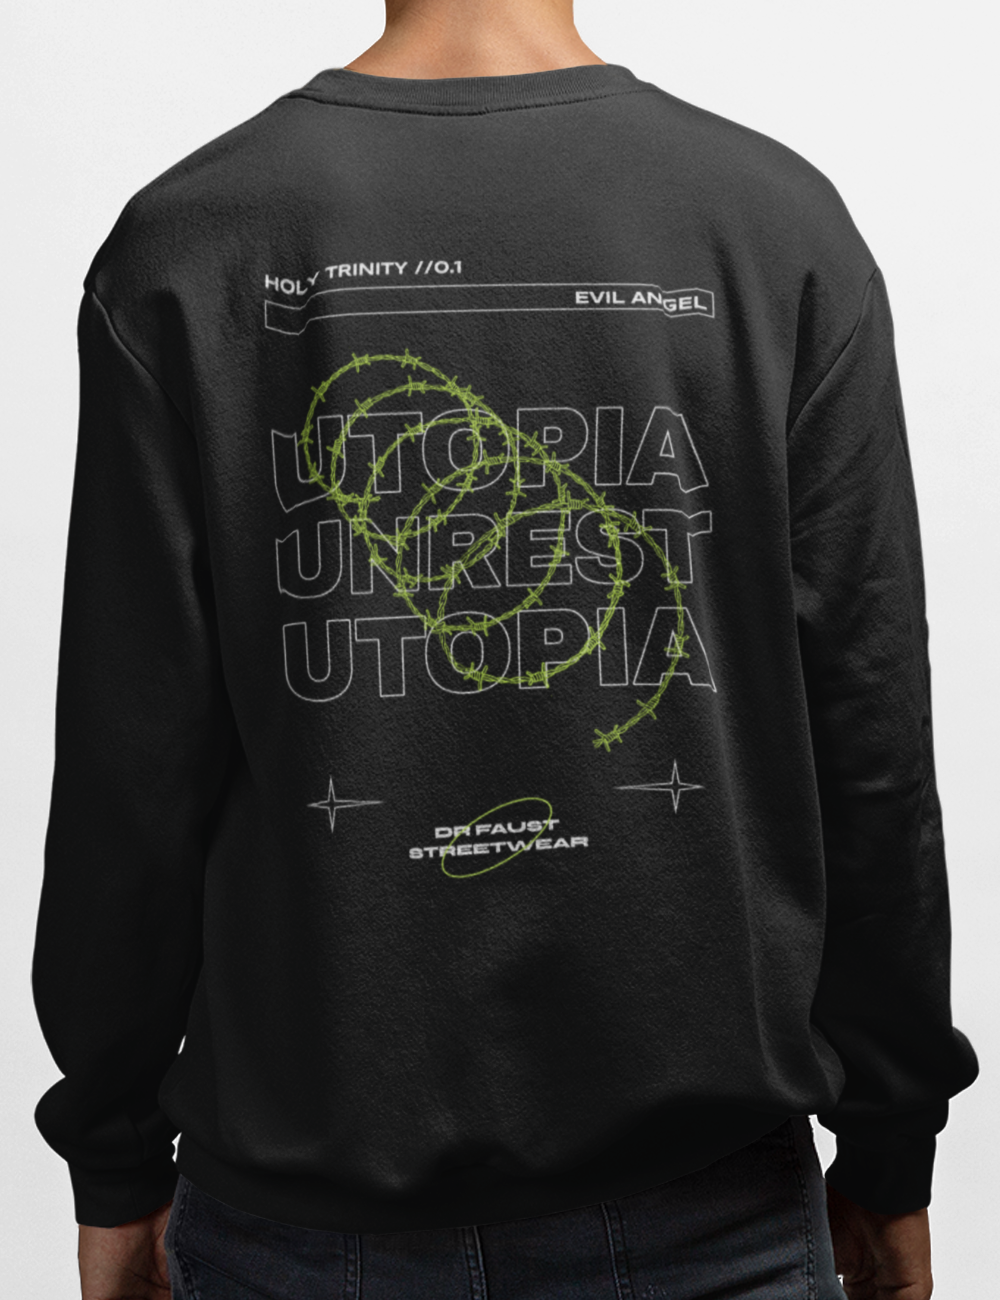 Dr Faust Utopia Black Unisex Sweatshirt.